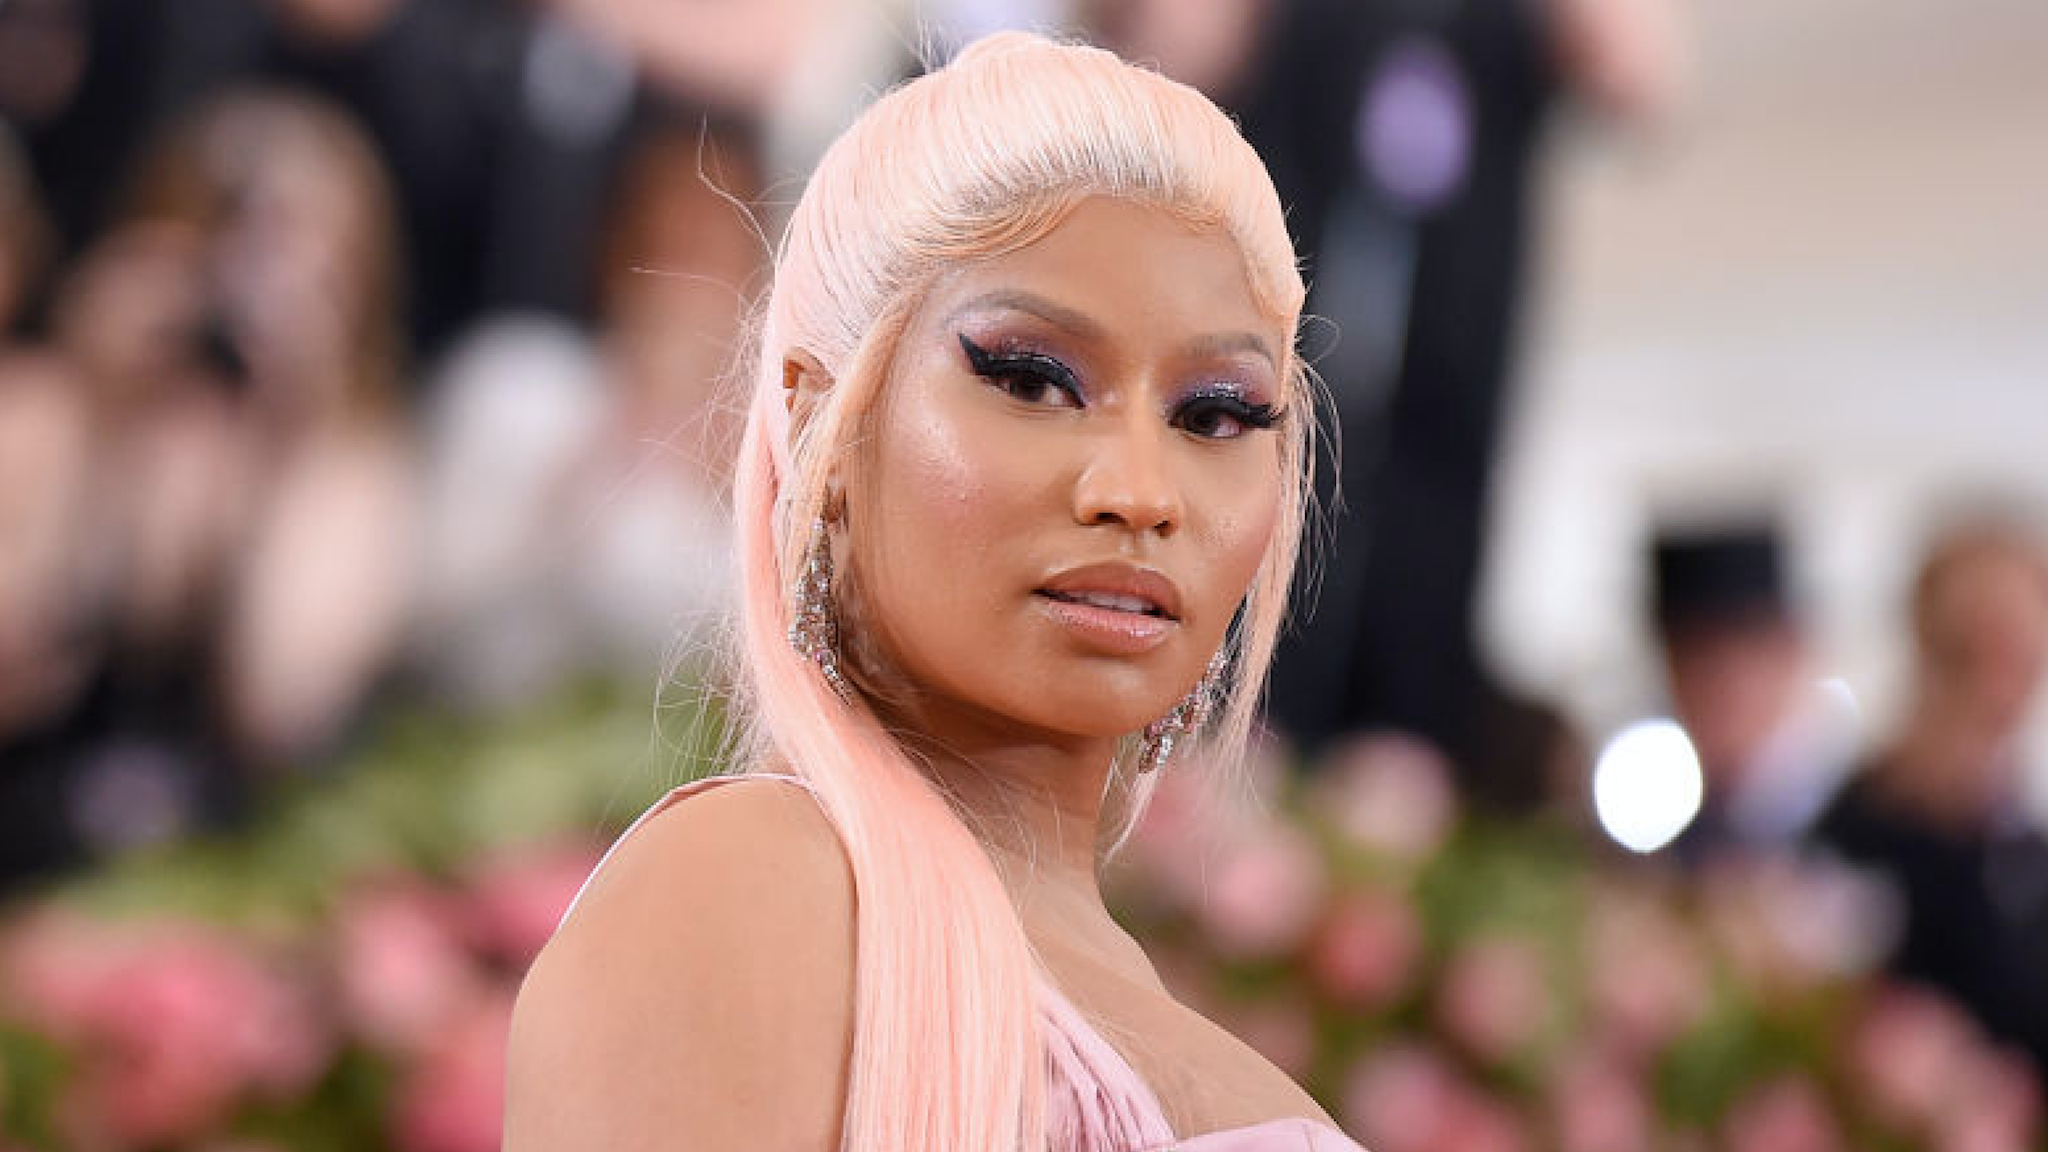 Nicki Minaj attends The 2019 Met Gala Celebrating Camp: Notes on Fashion at Metropolitan Museum of Art on May 06, 2019 in New York City.